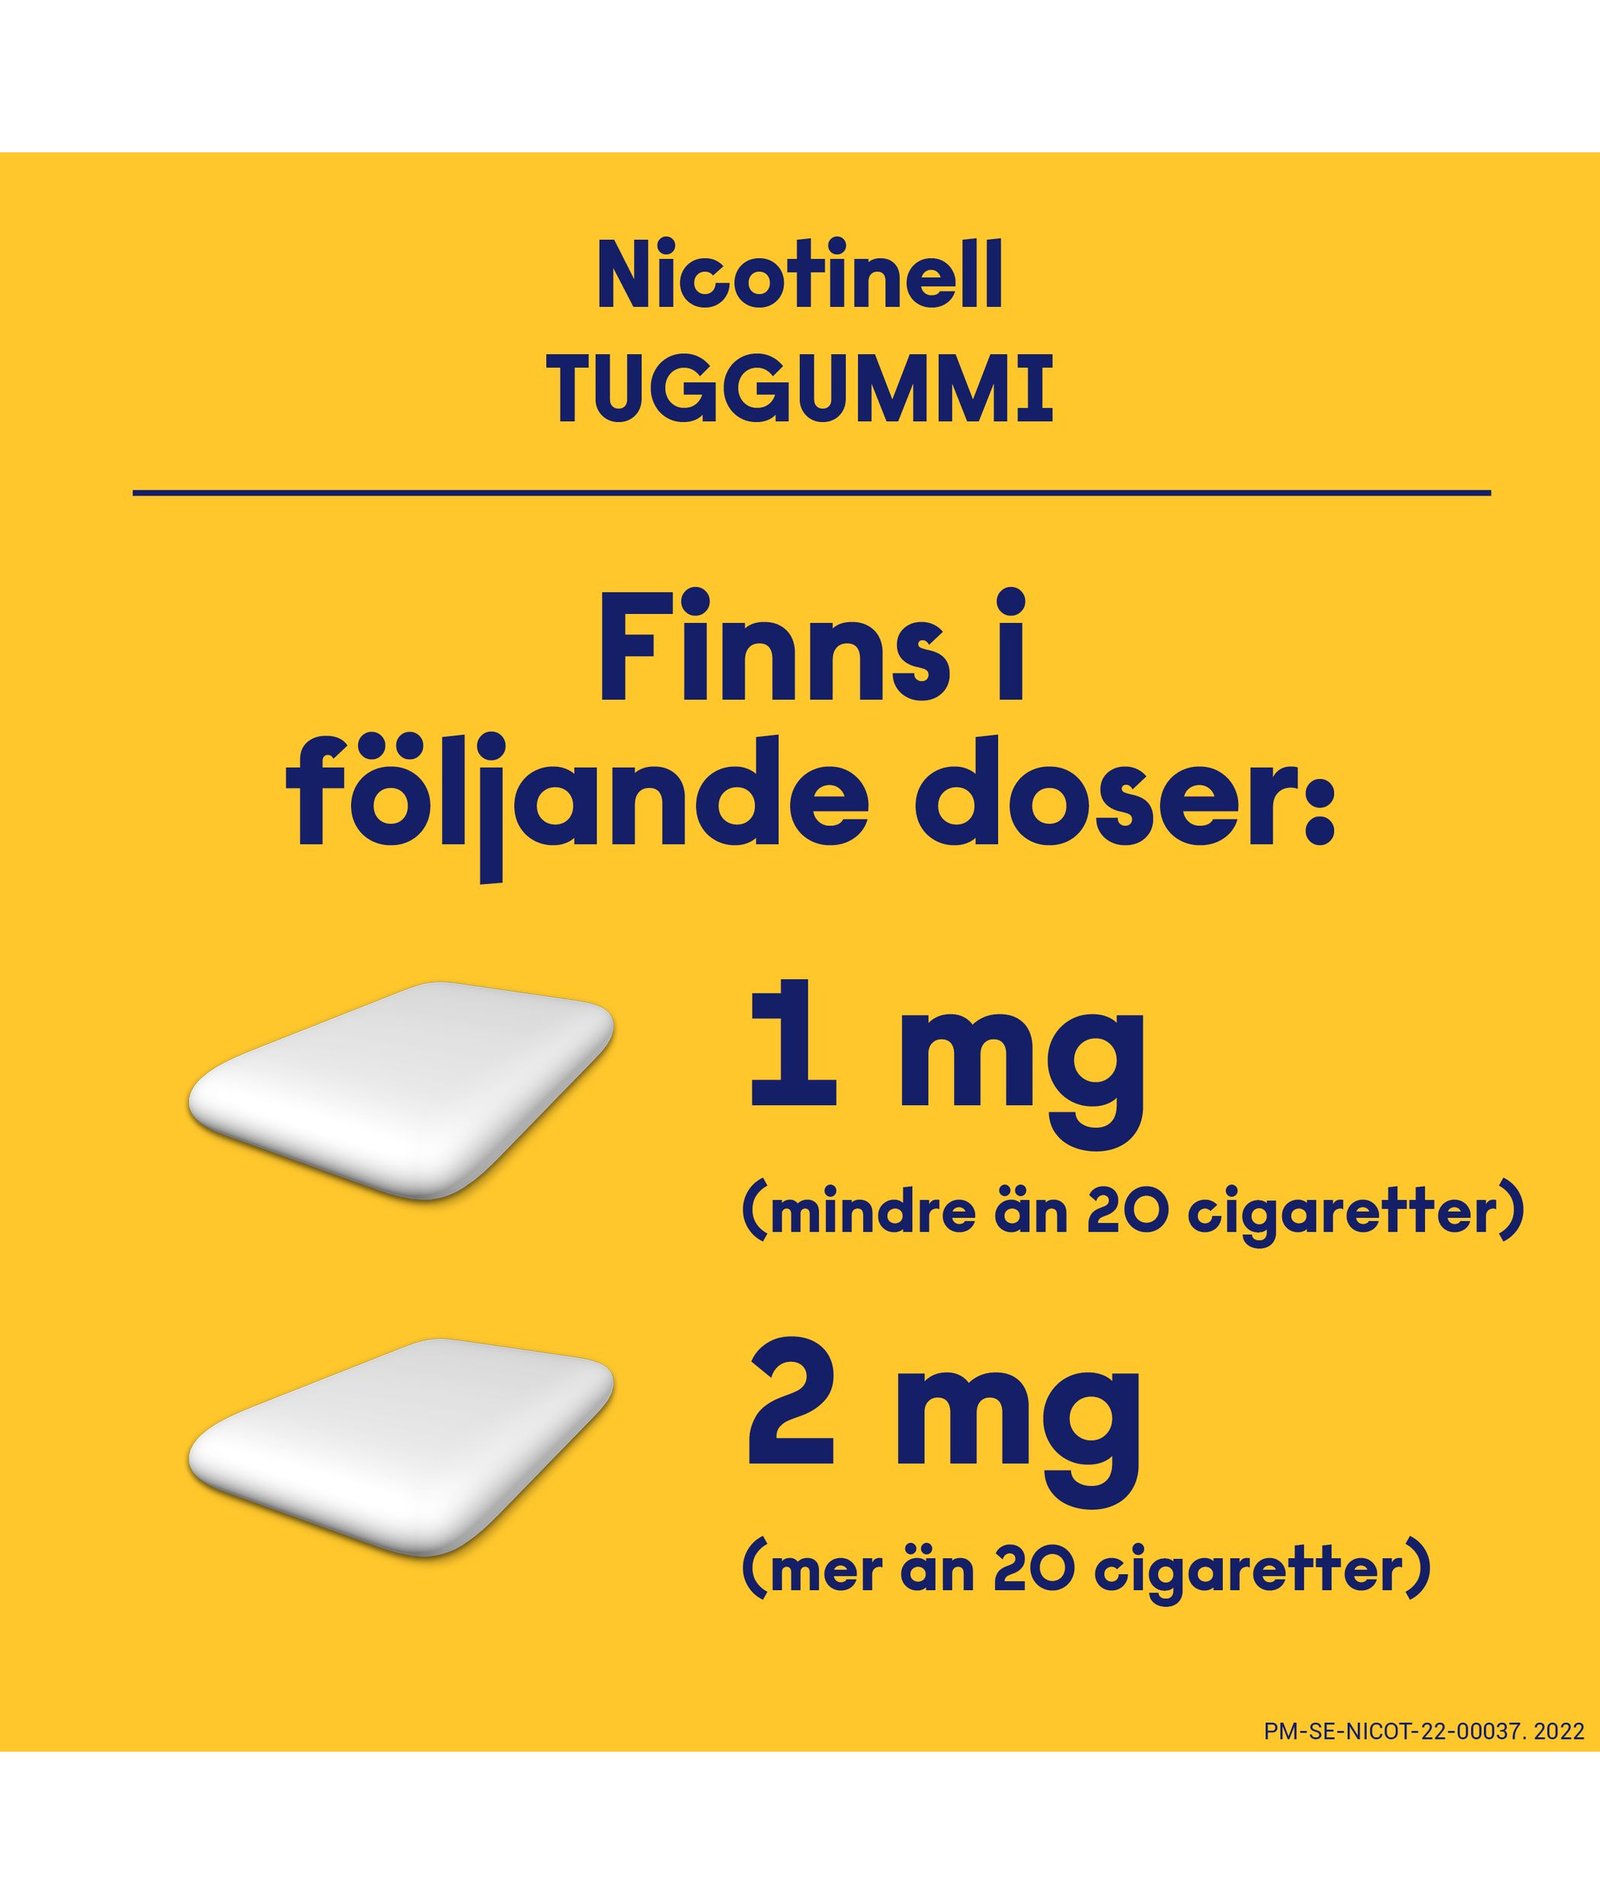 Nicotinell Mint 2mg Nikotin Medicinska Tuggummin 96 st